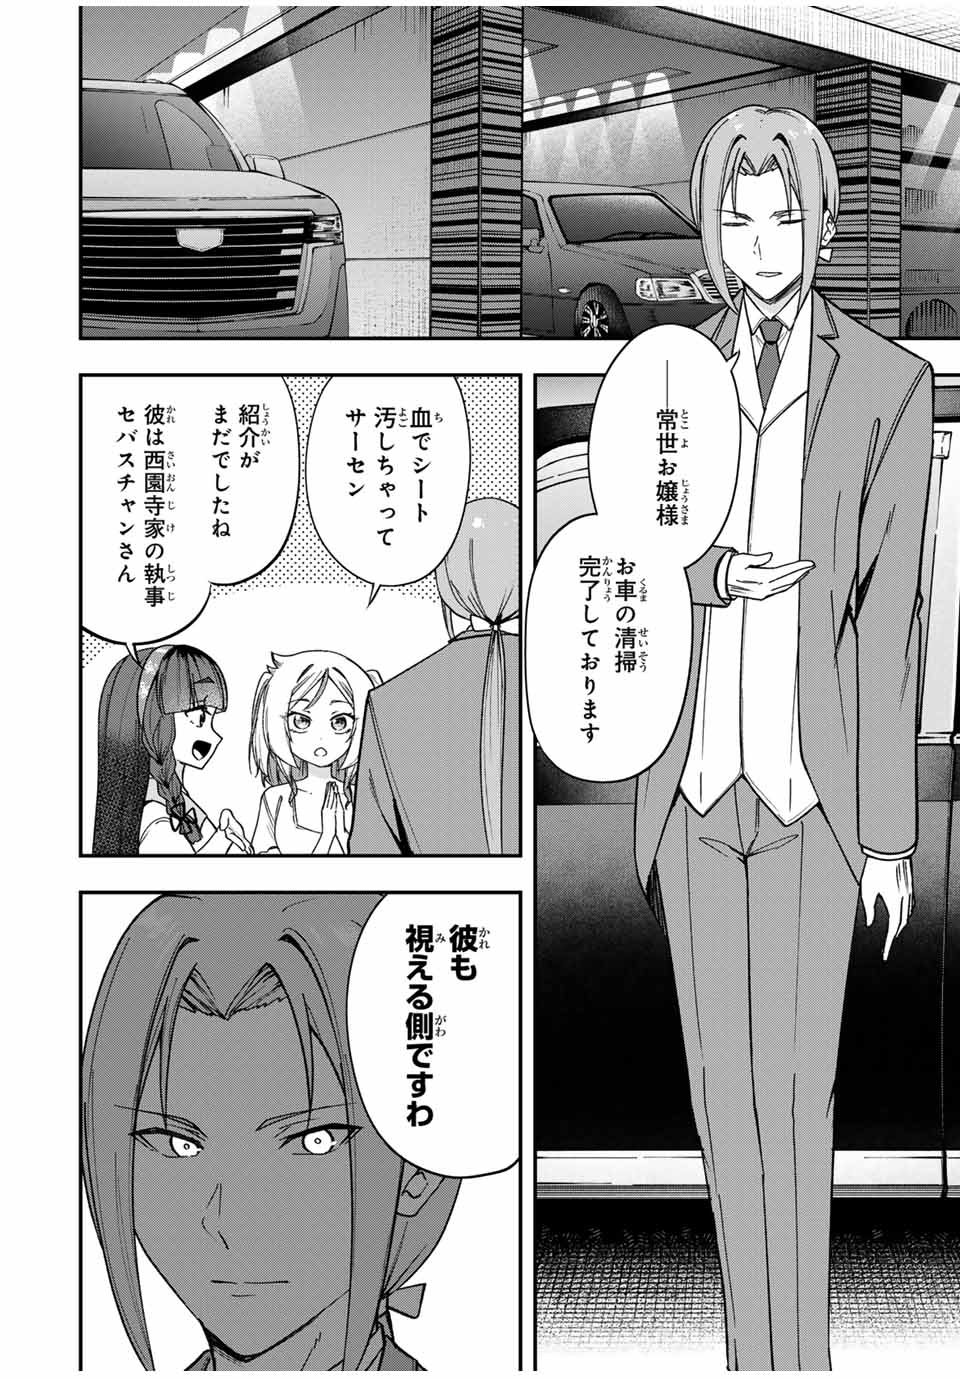 Heroine wa xx Okasegitai - Chapter 5 - Page 2